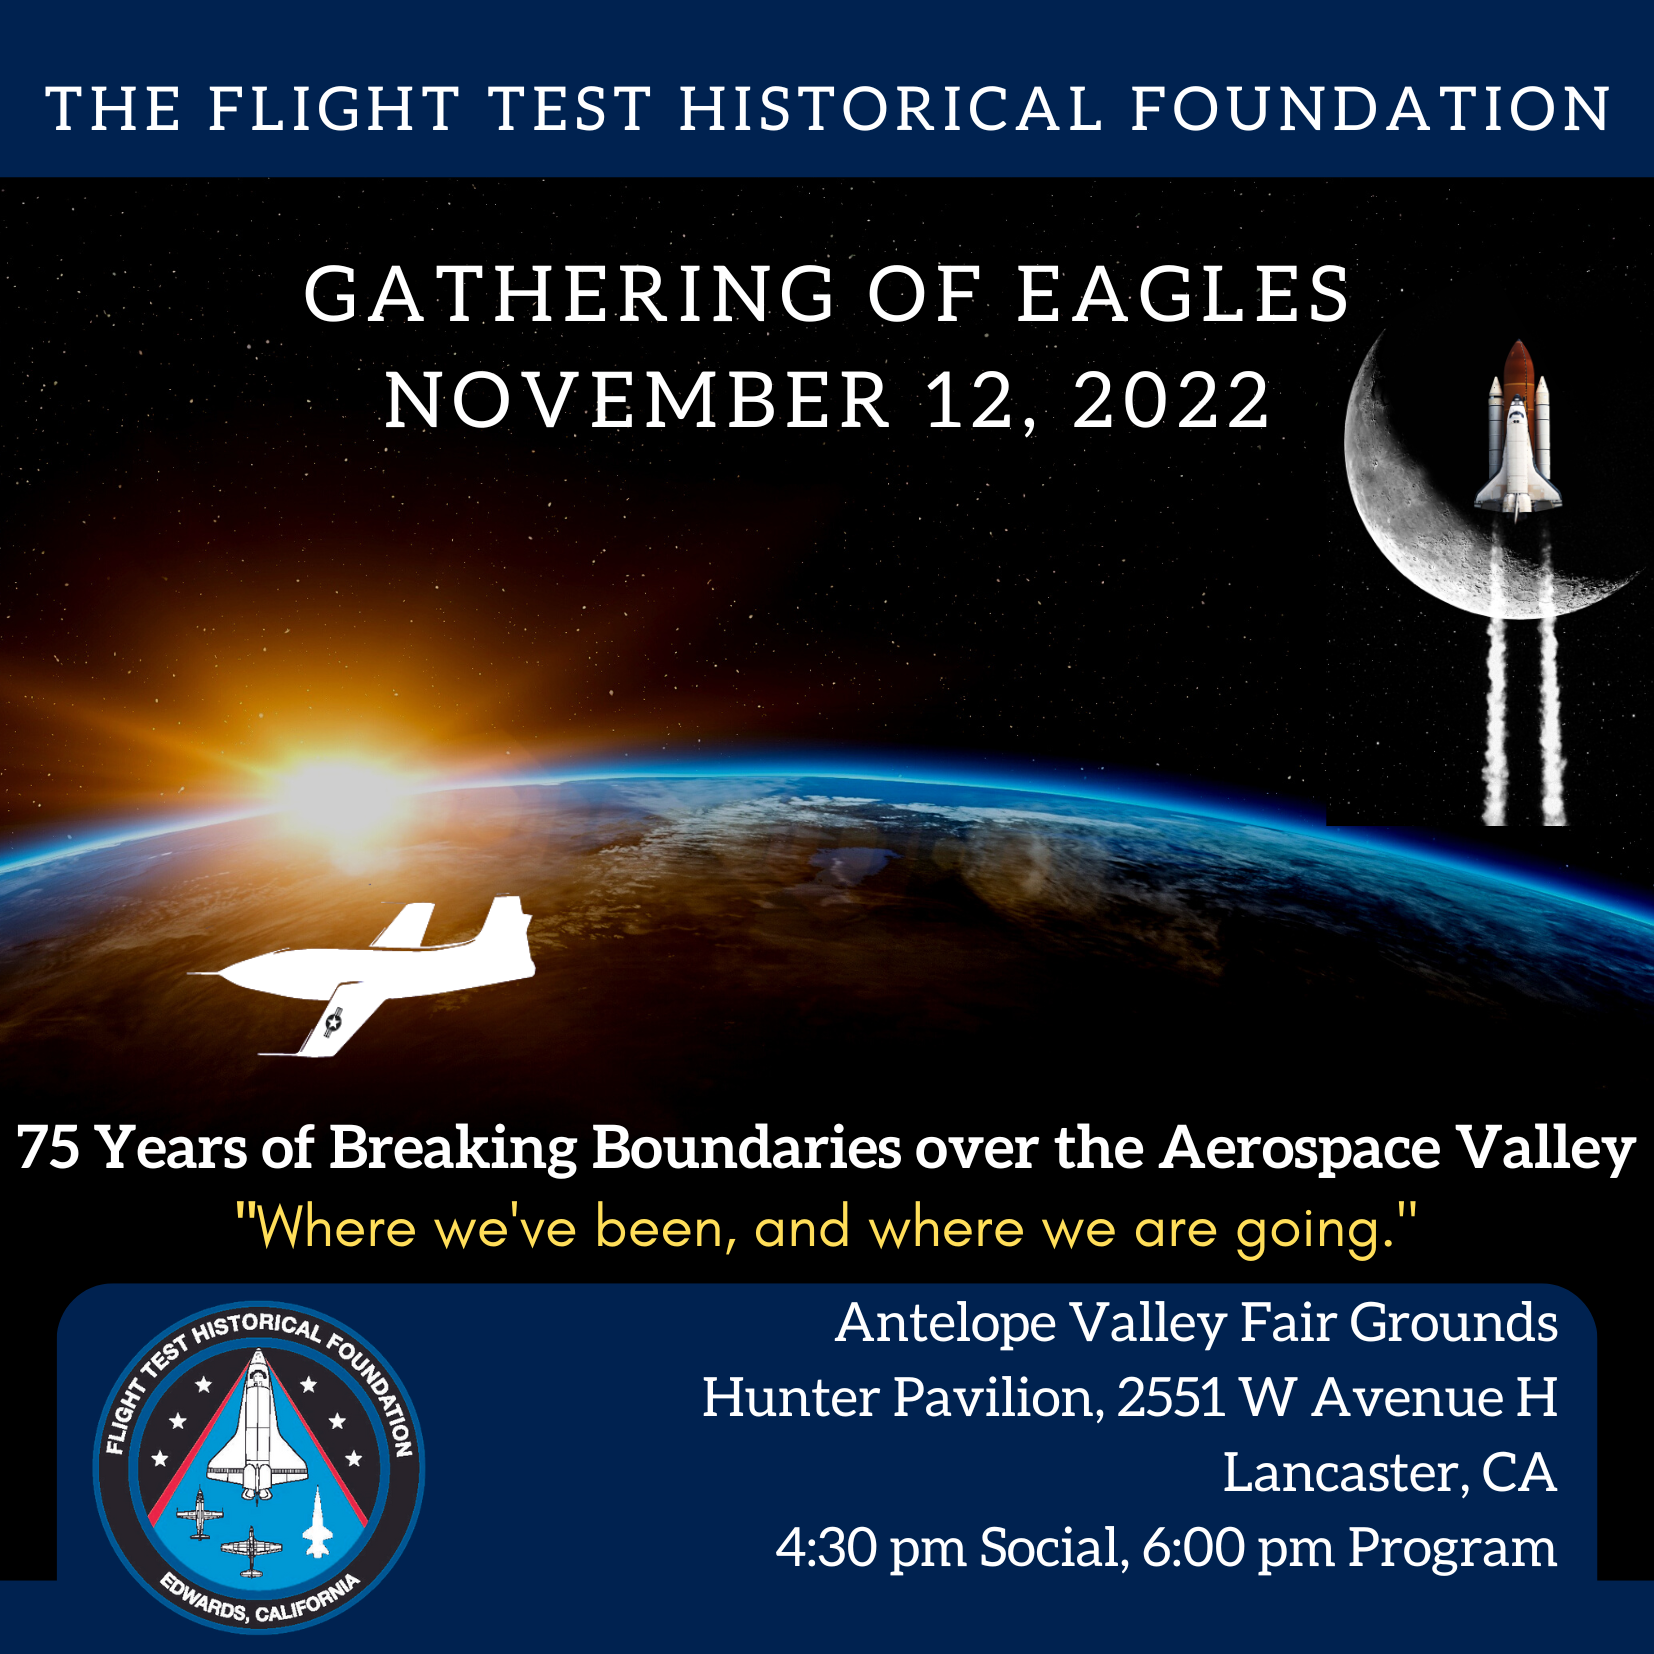 2022 Gathering of Eagles FLIGHT TEST MUSEUM FOUNDATION